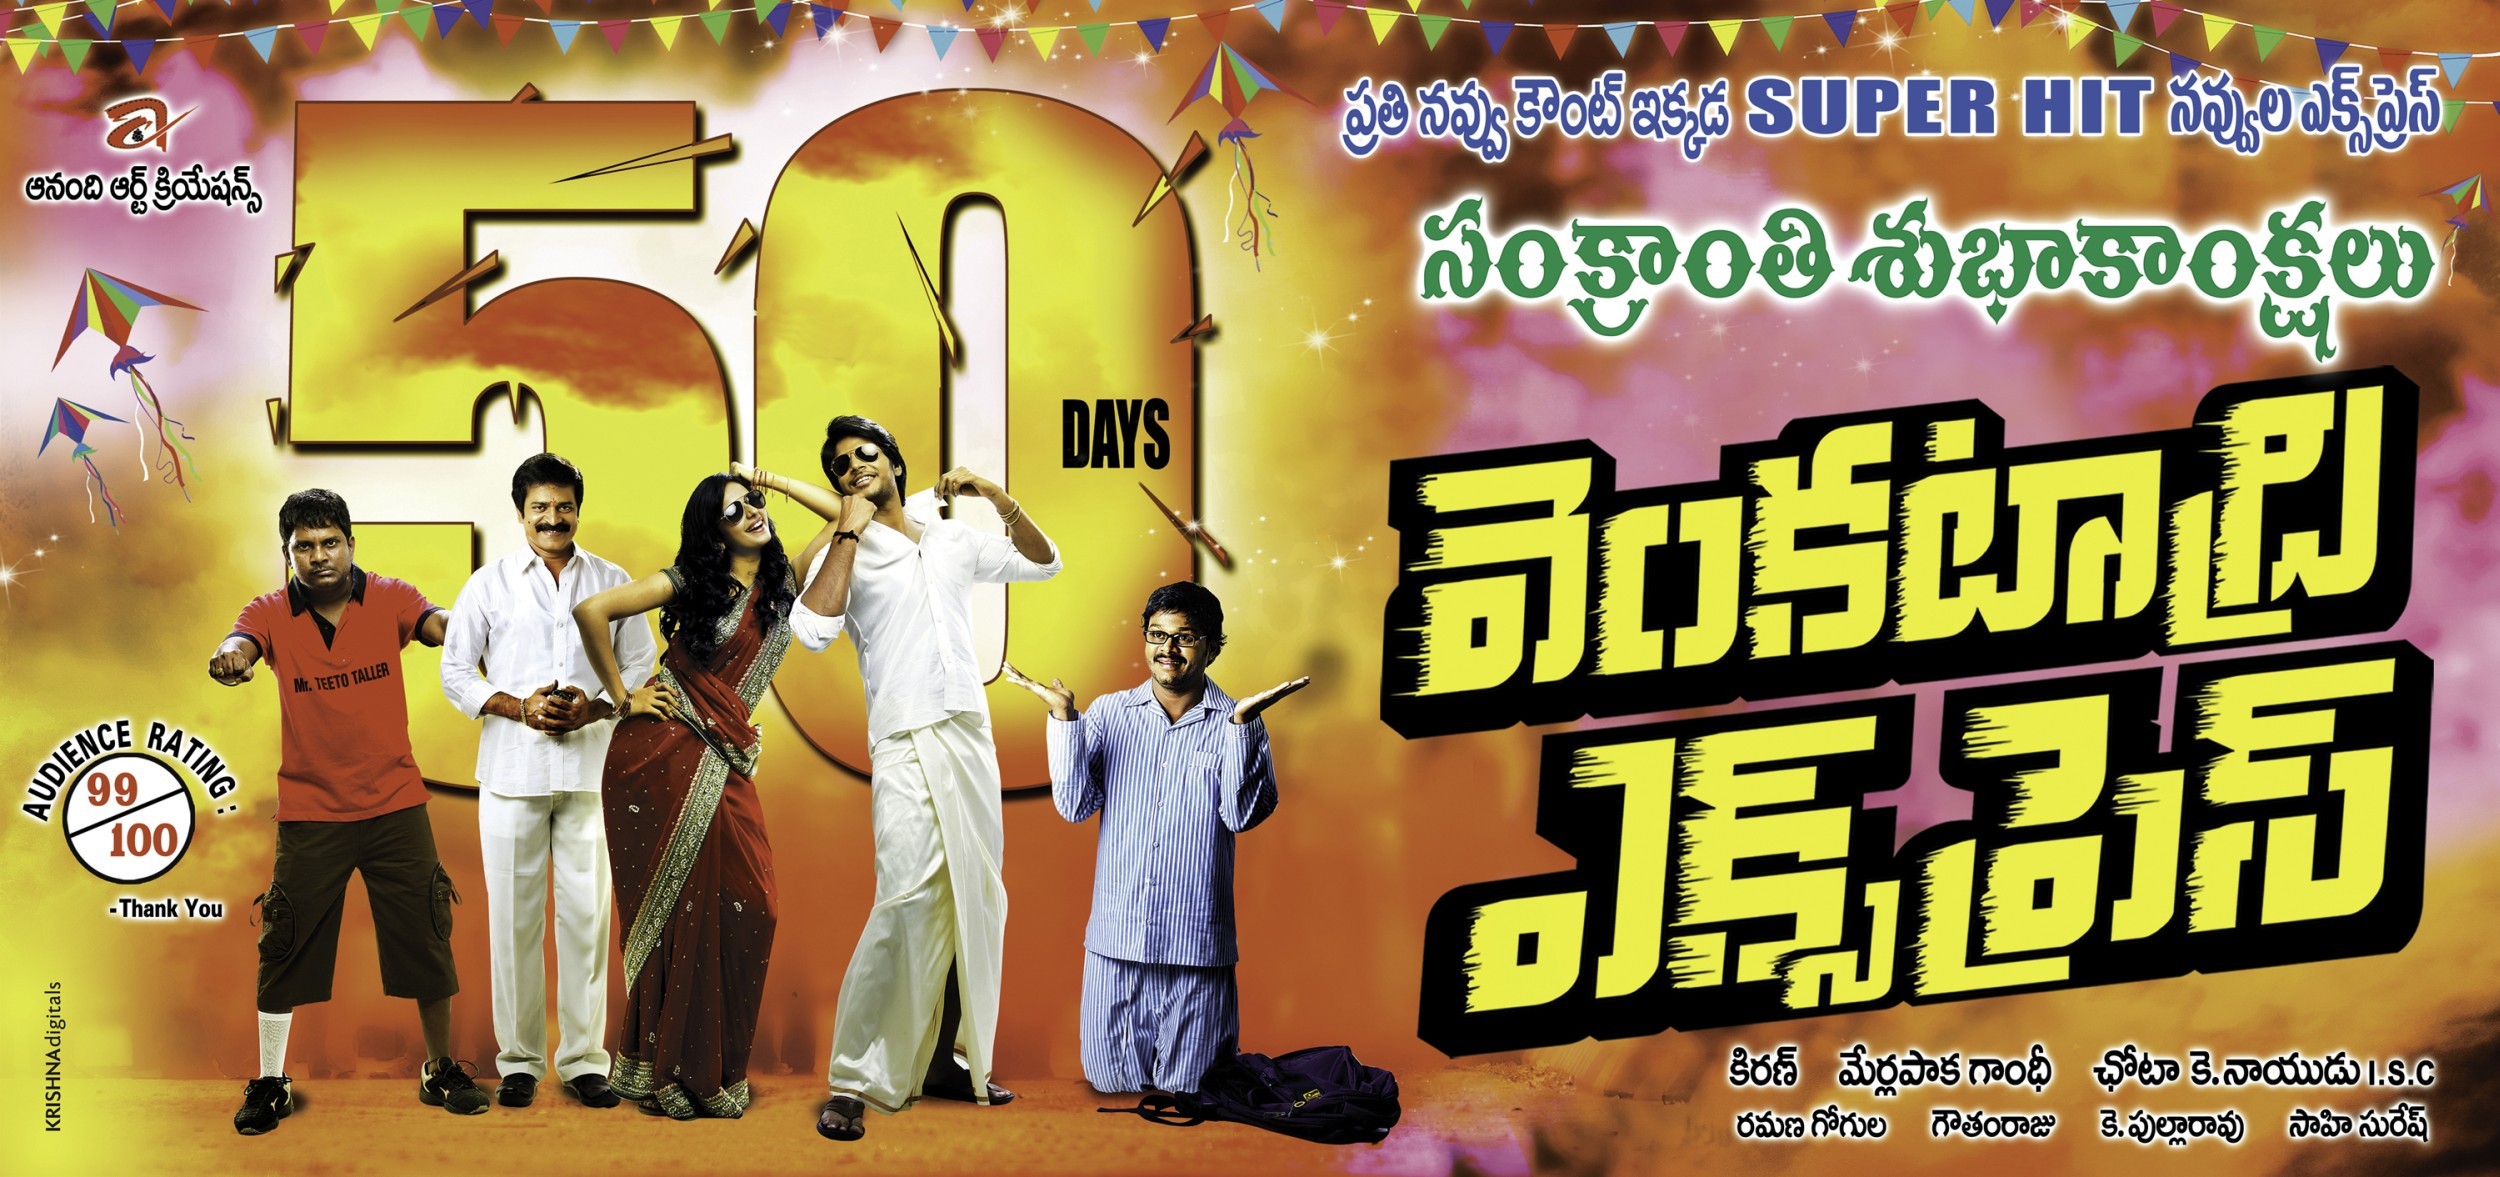 Mega Sized Movie Poster Image for Venkatadri Express (#10 of 17)